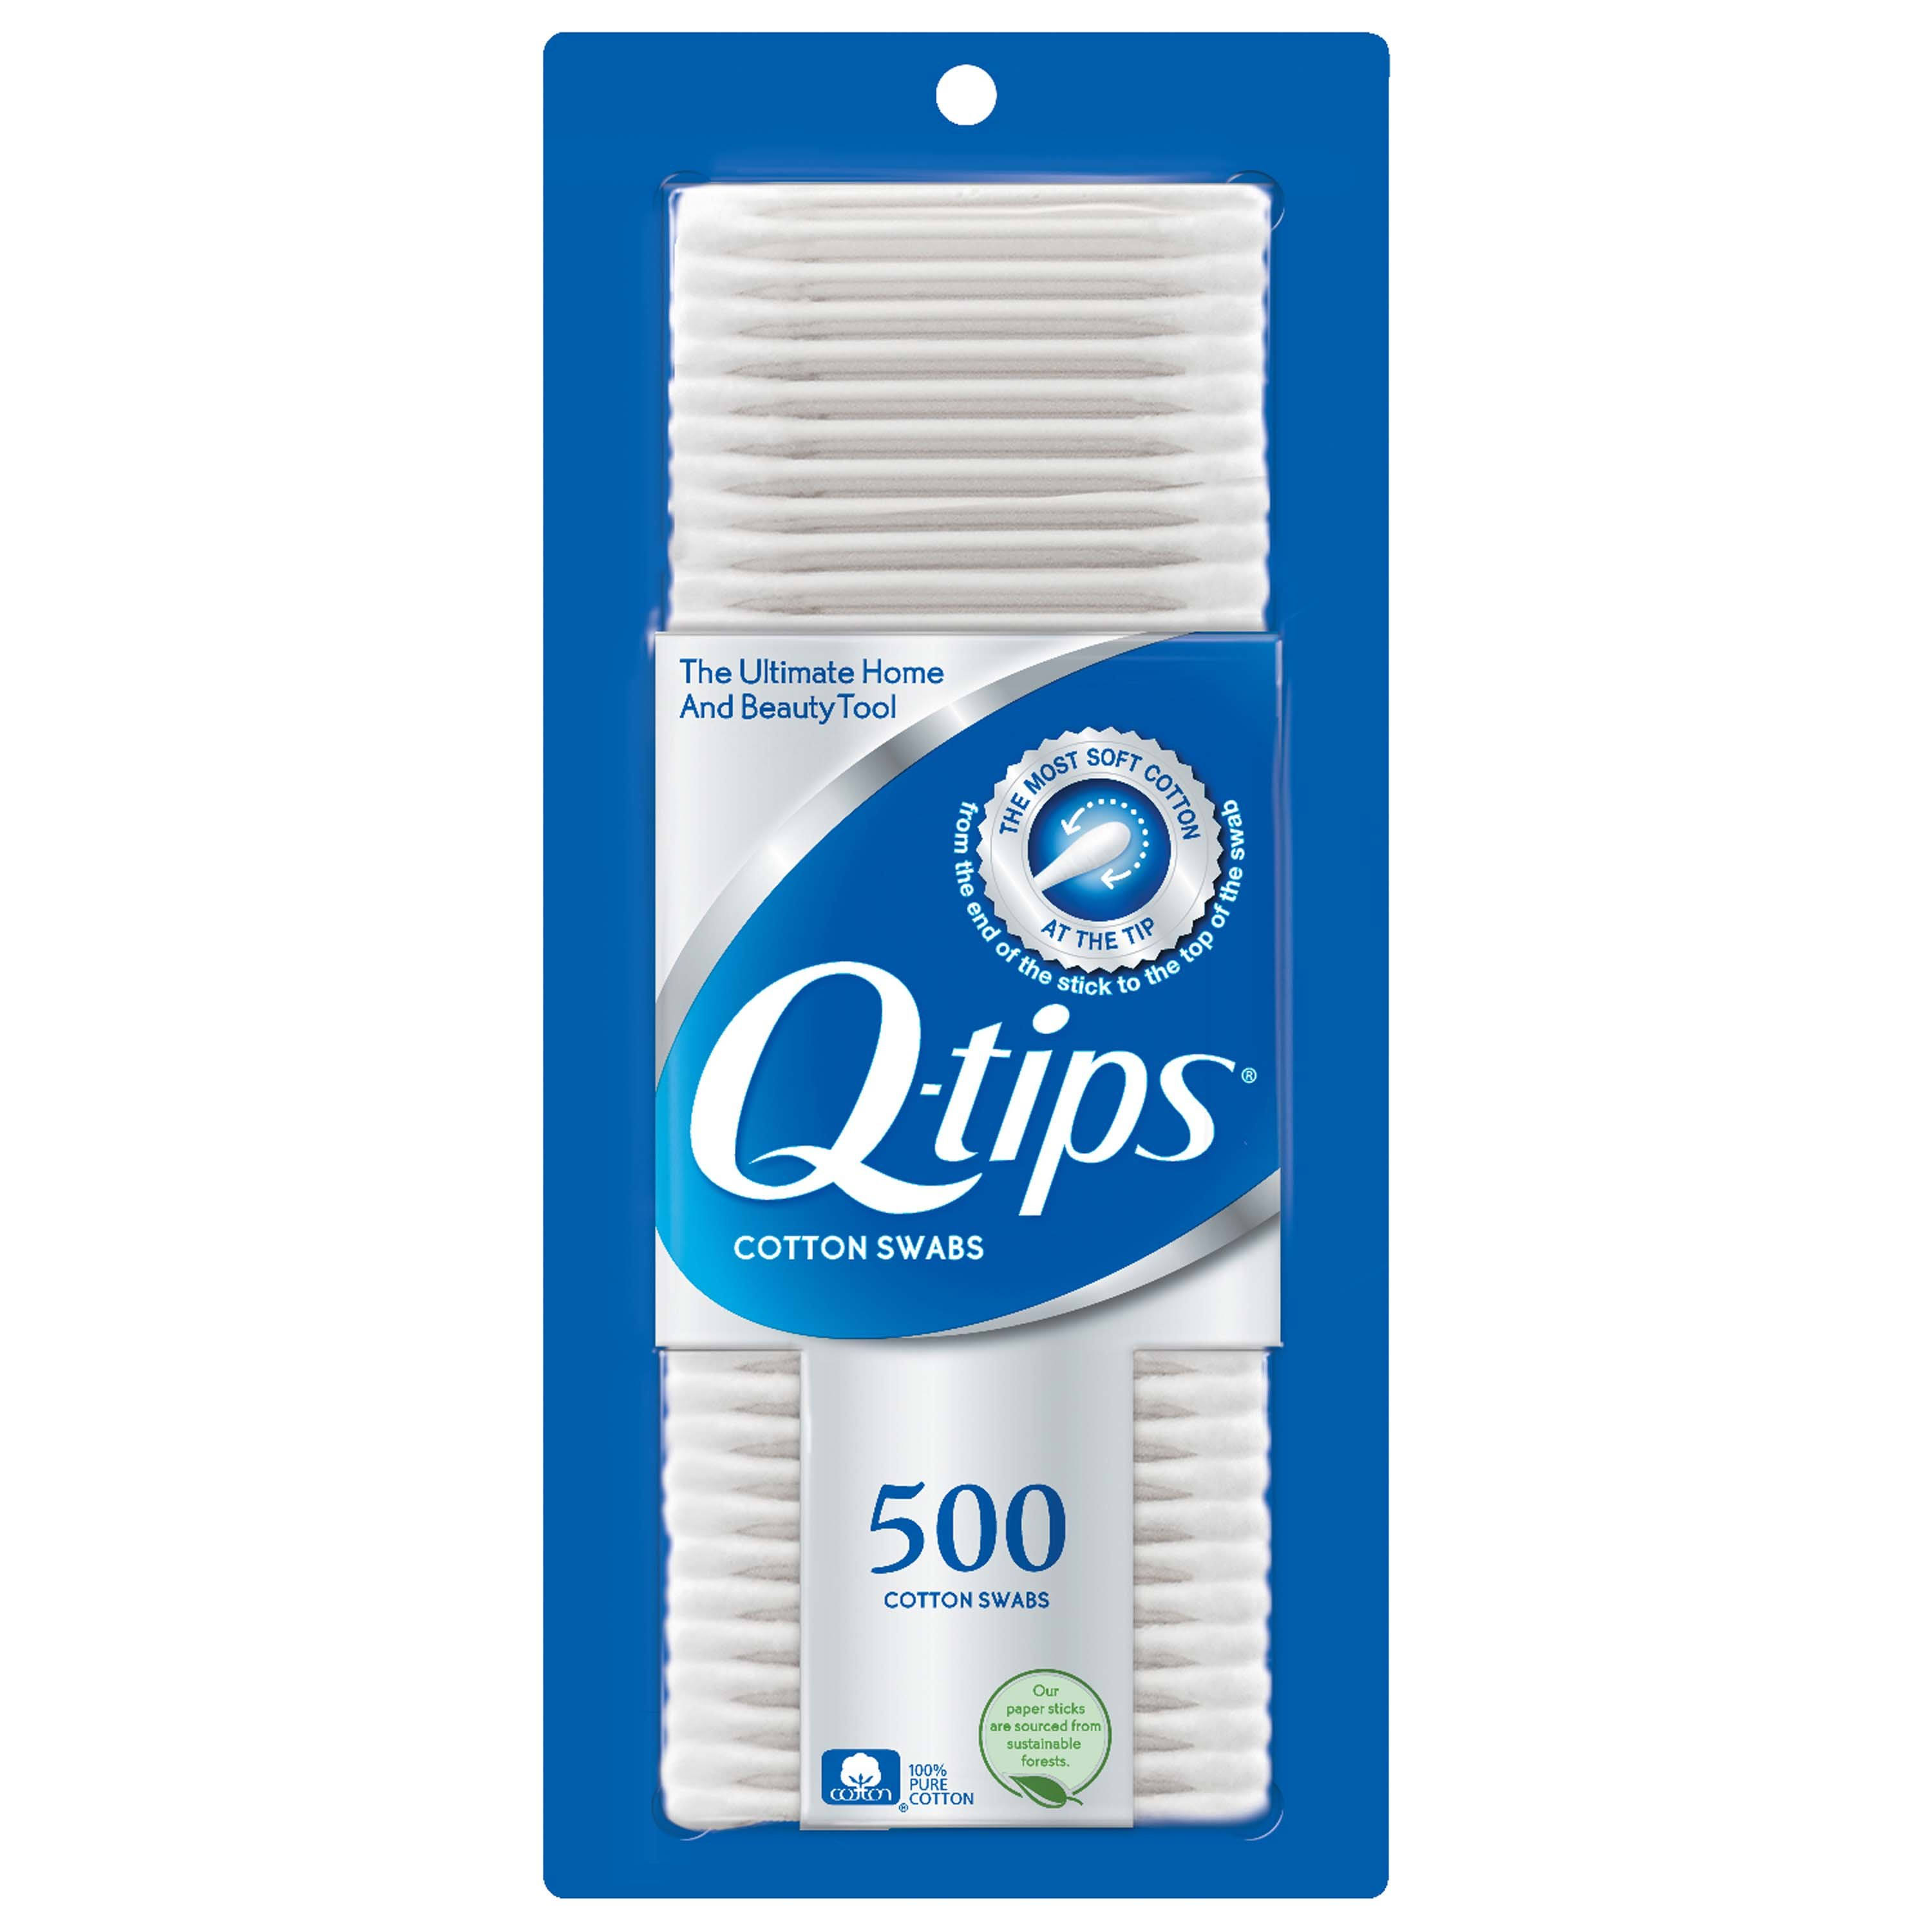 Q-tips Cotton Swabs - x500